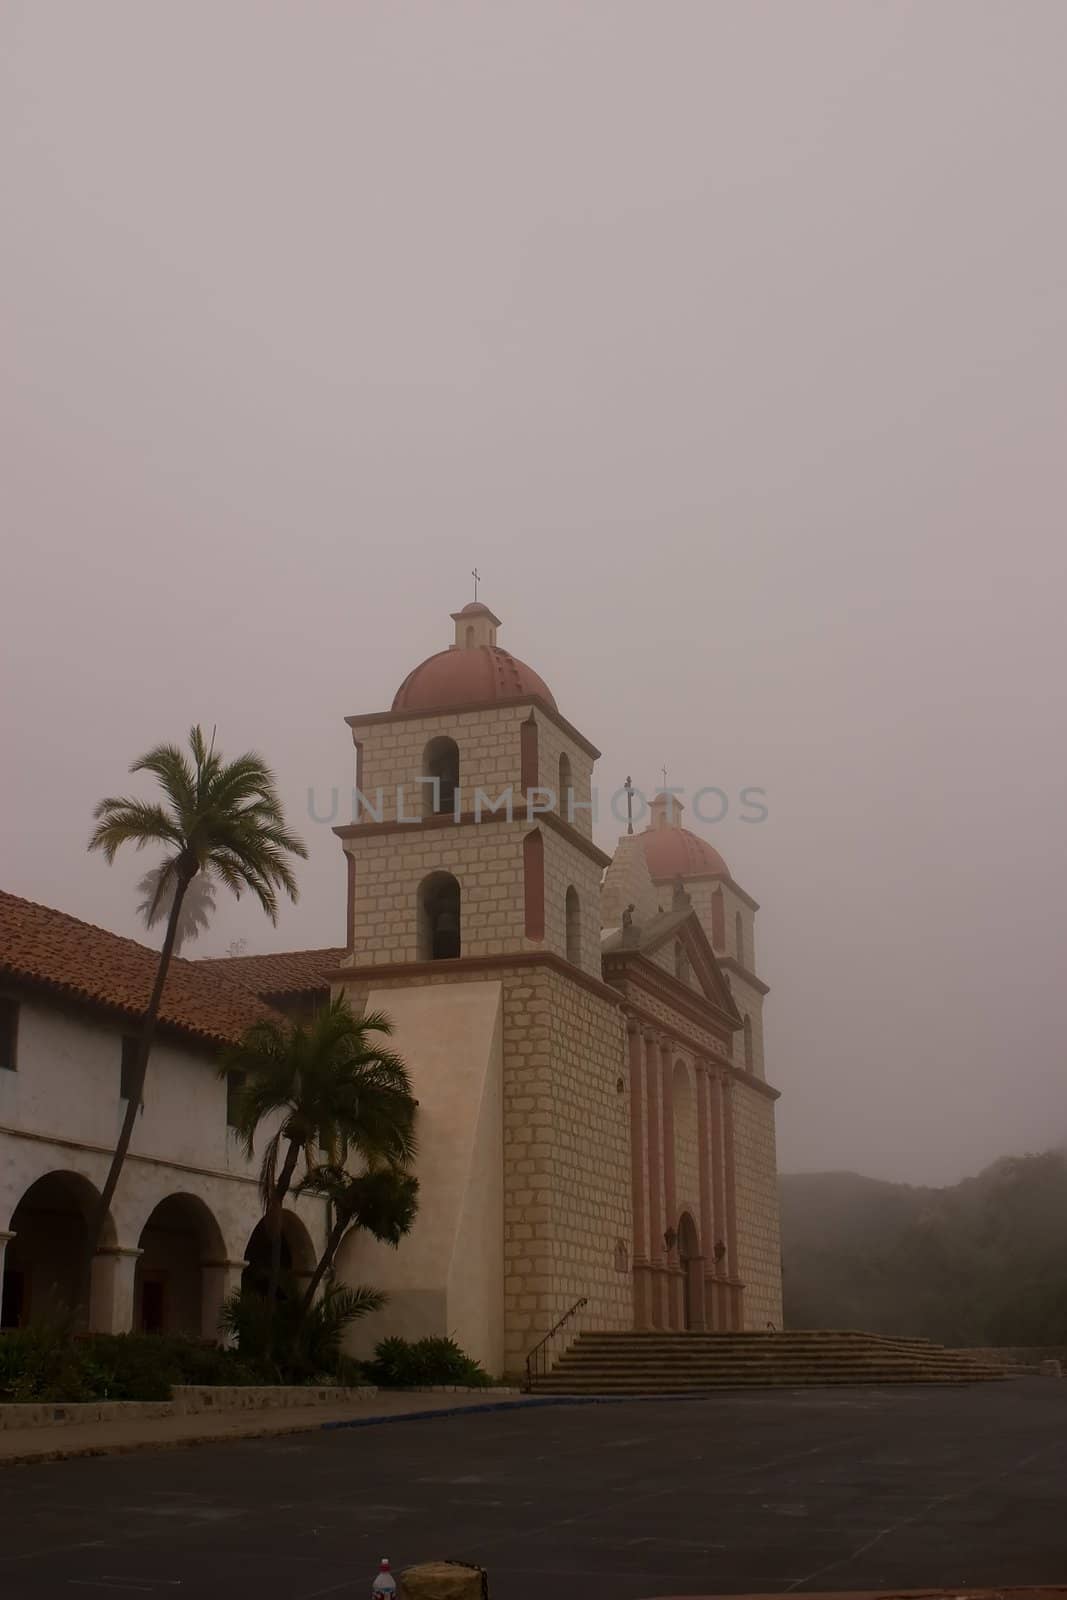 Historic Spanish mission in Santa Barbara, California